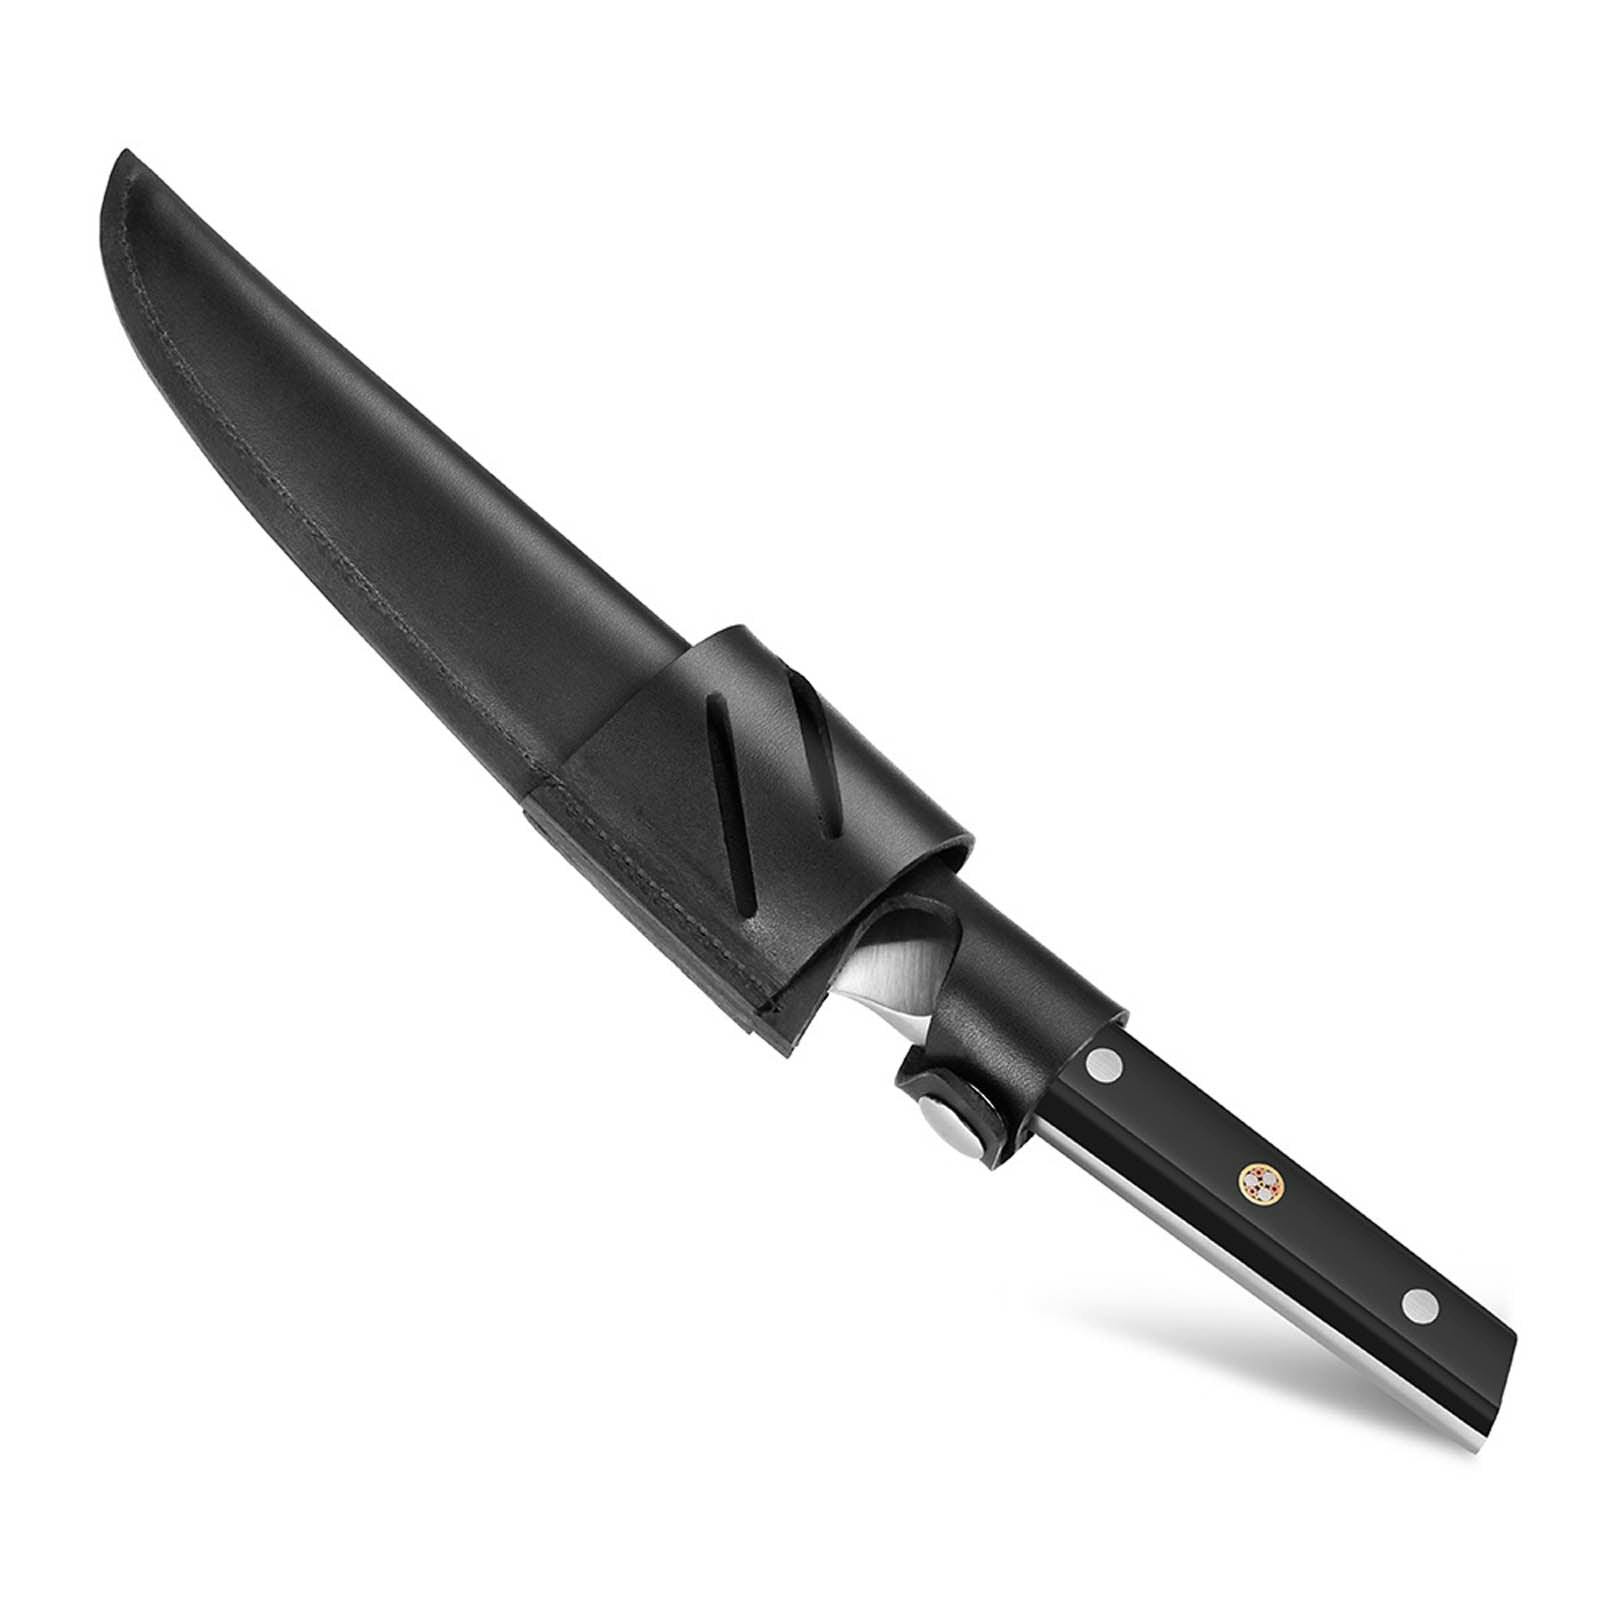 Cangshan TC Series 7" Fillet Knife